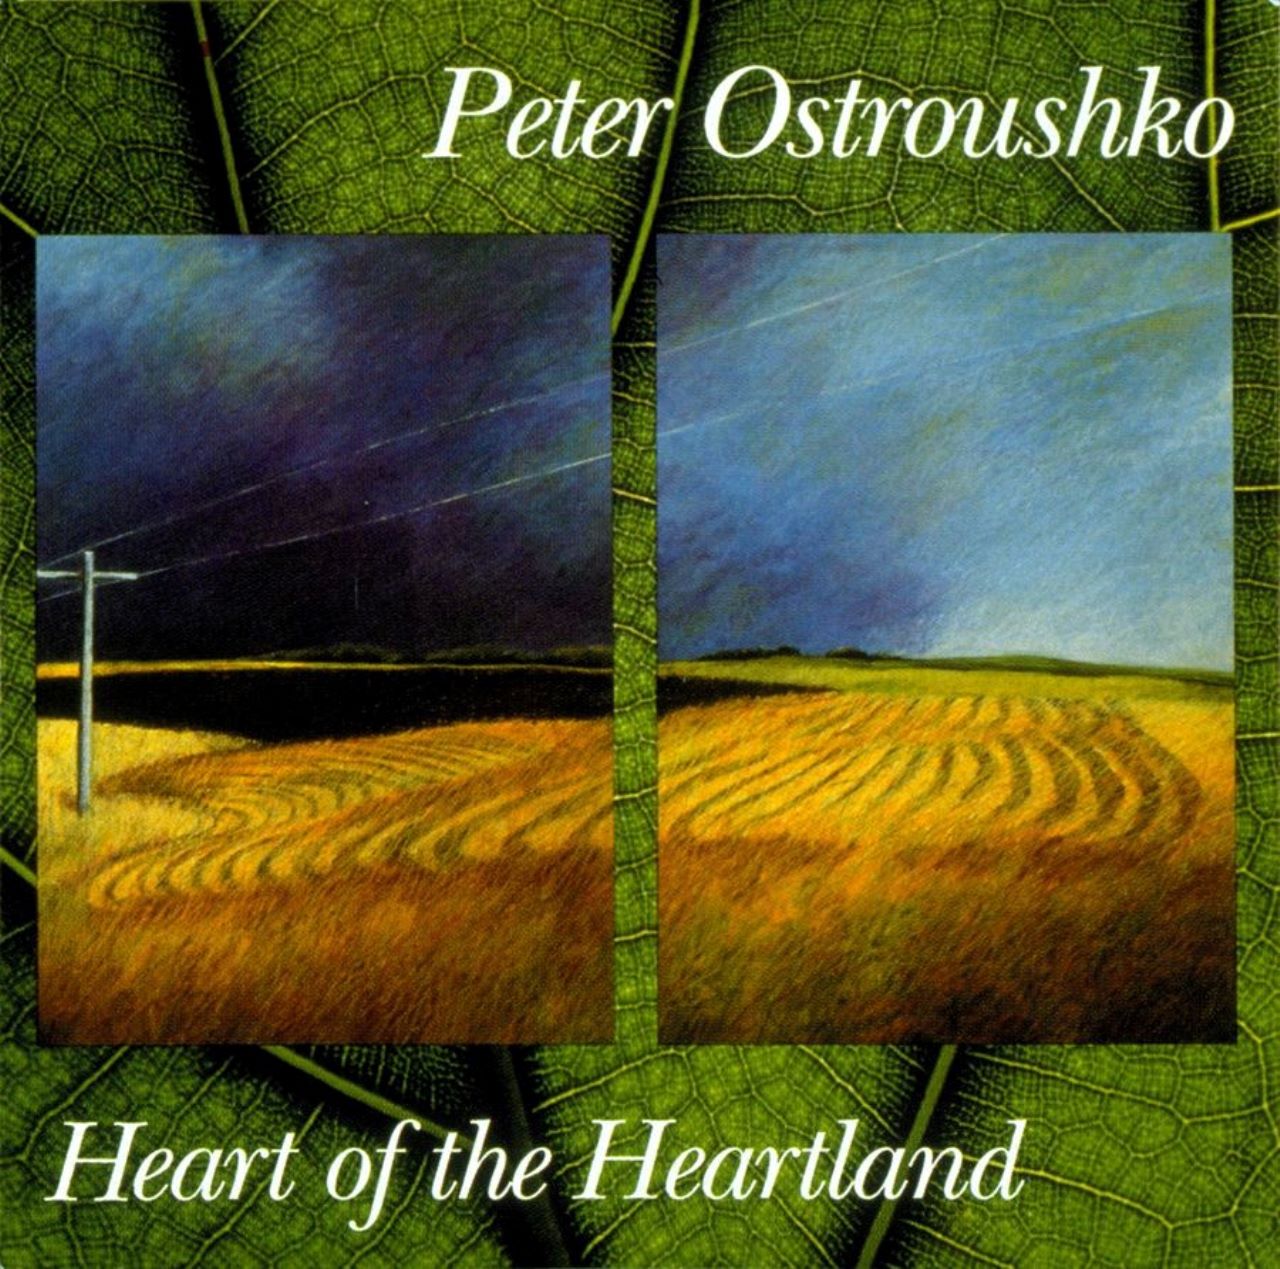 Peter Ostroushko - Heart Of Heartland cover album